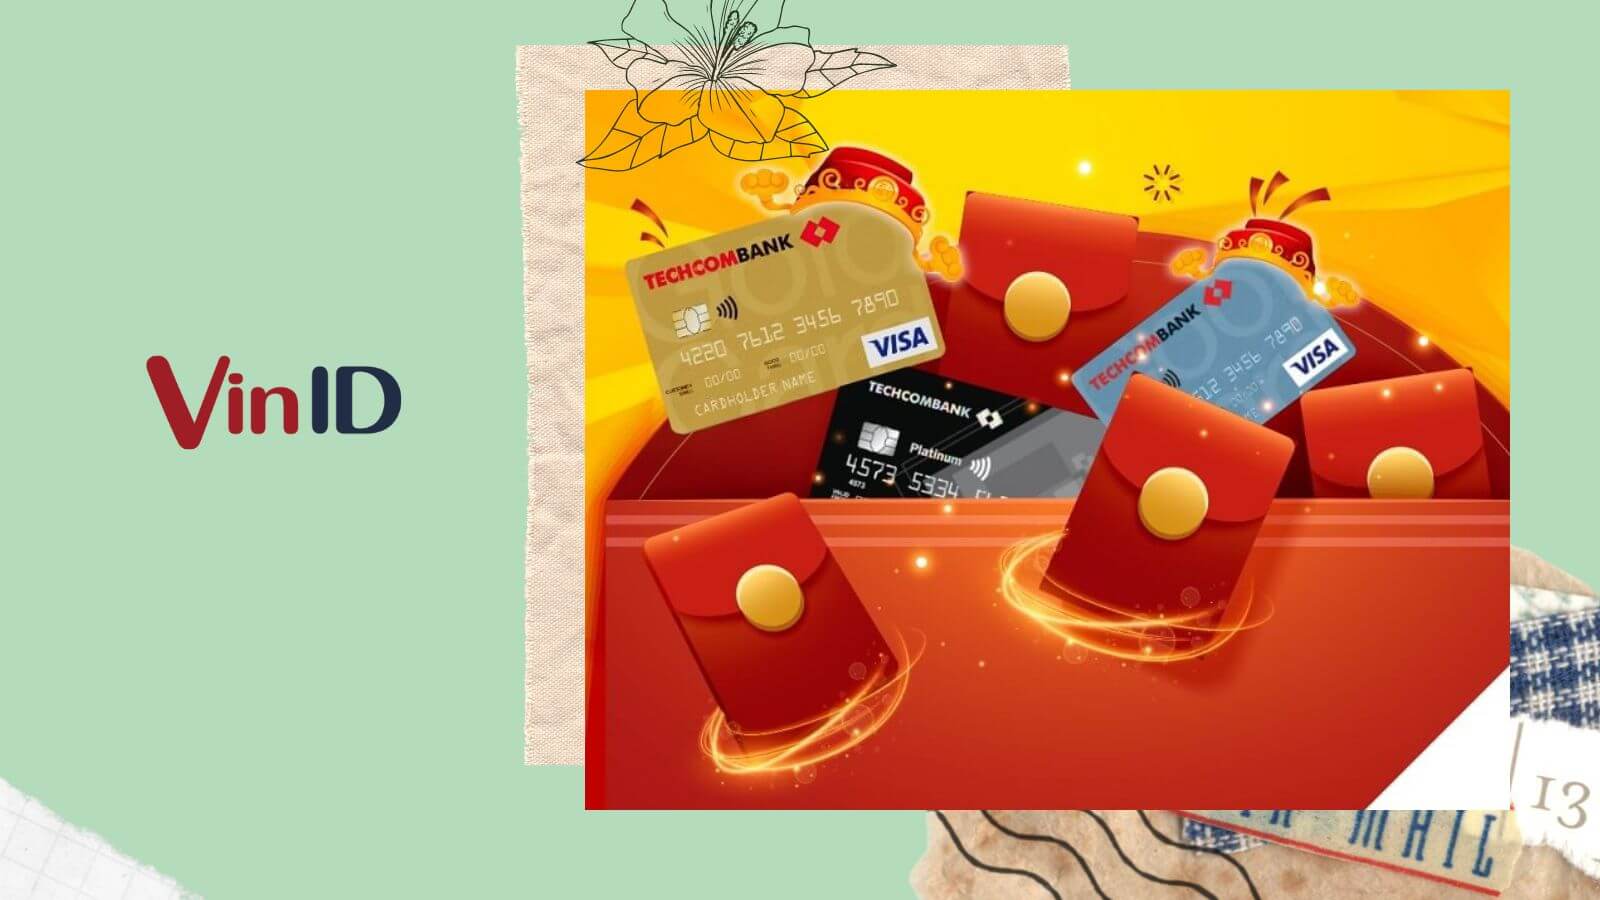 Thẻ Techcombank Visa Debit Platinum có gì đặc biệt?
